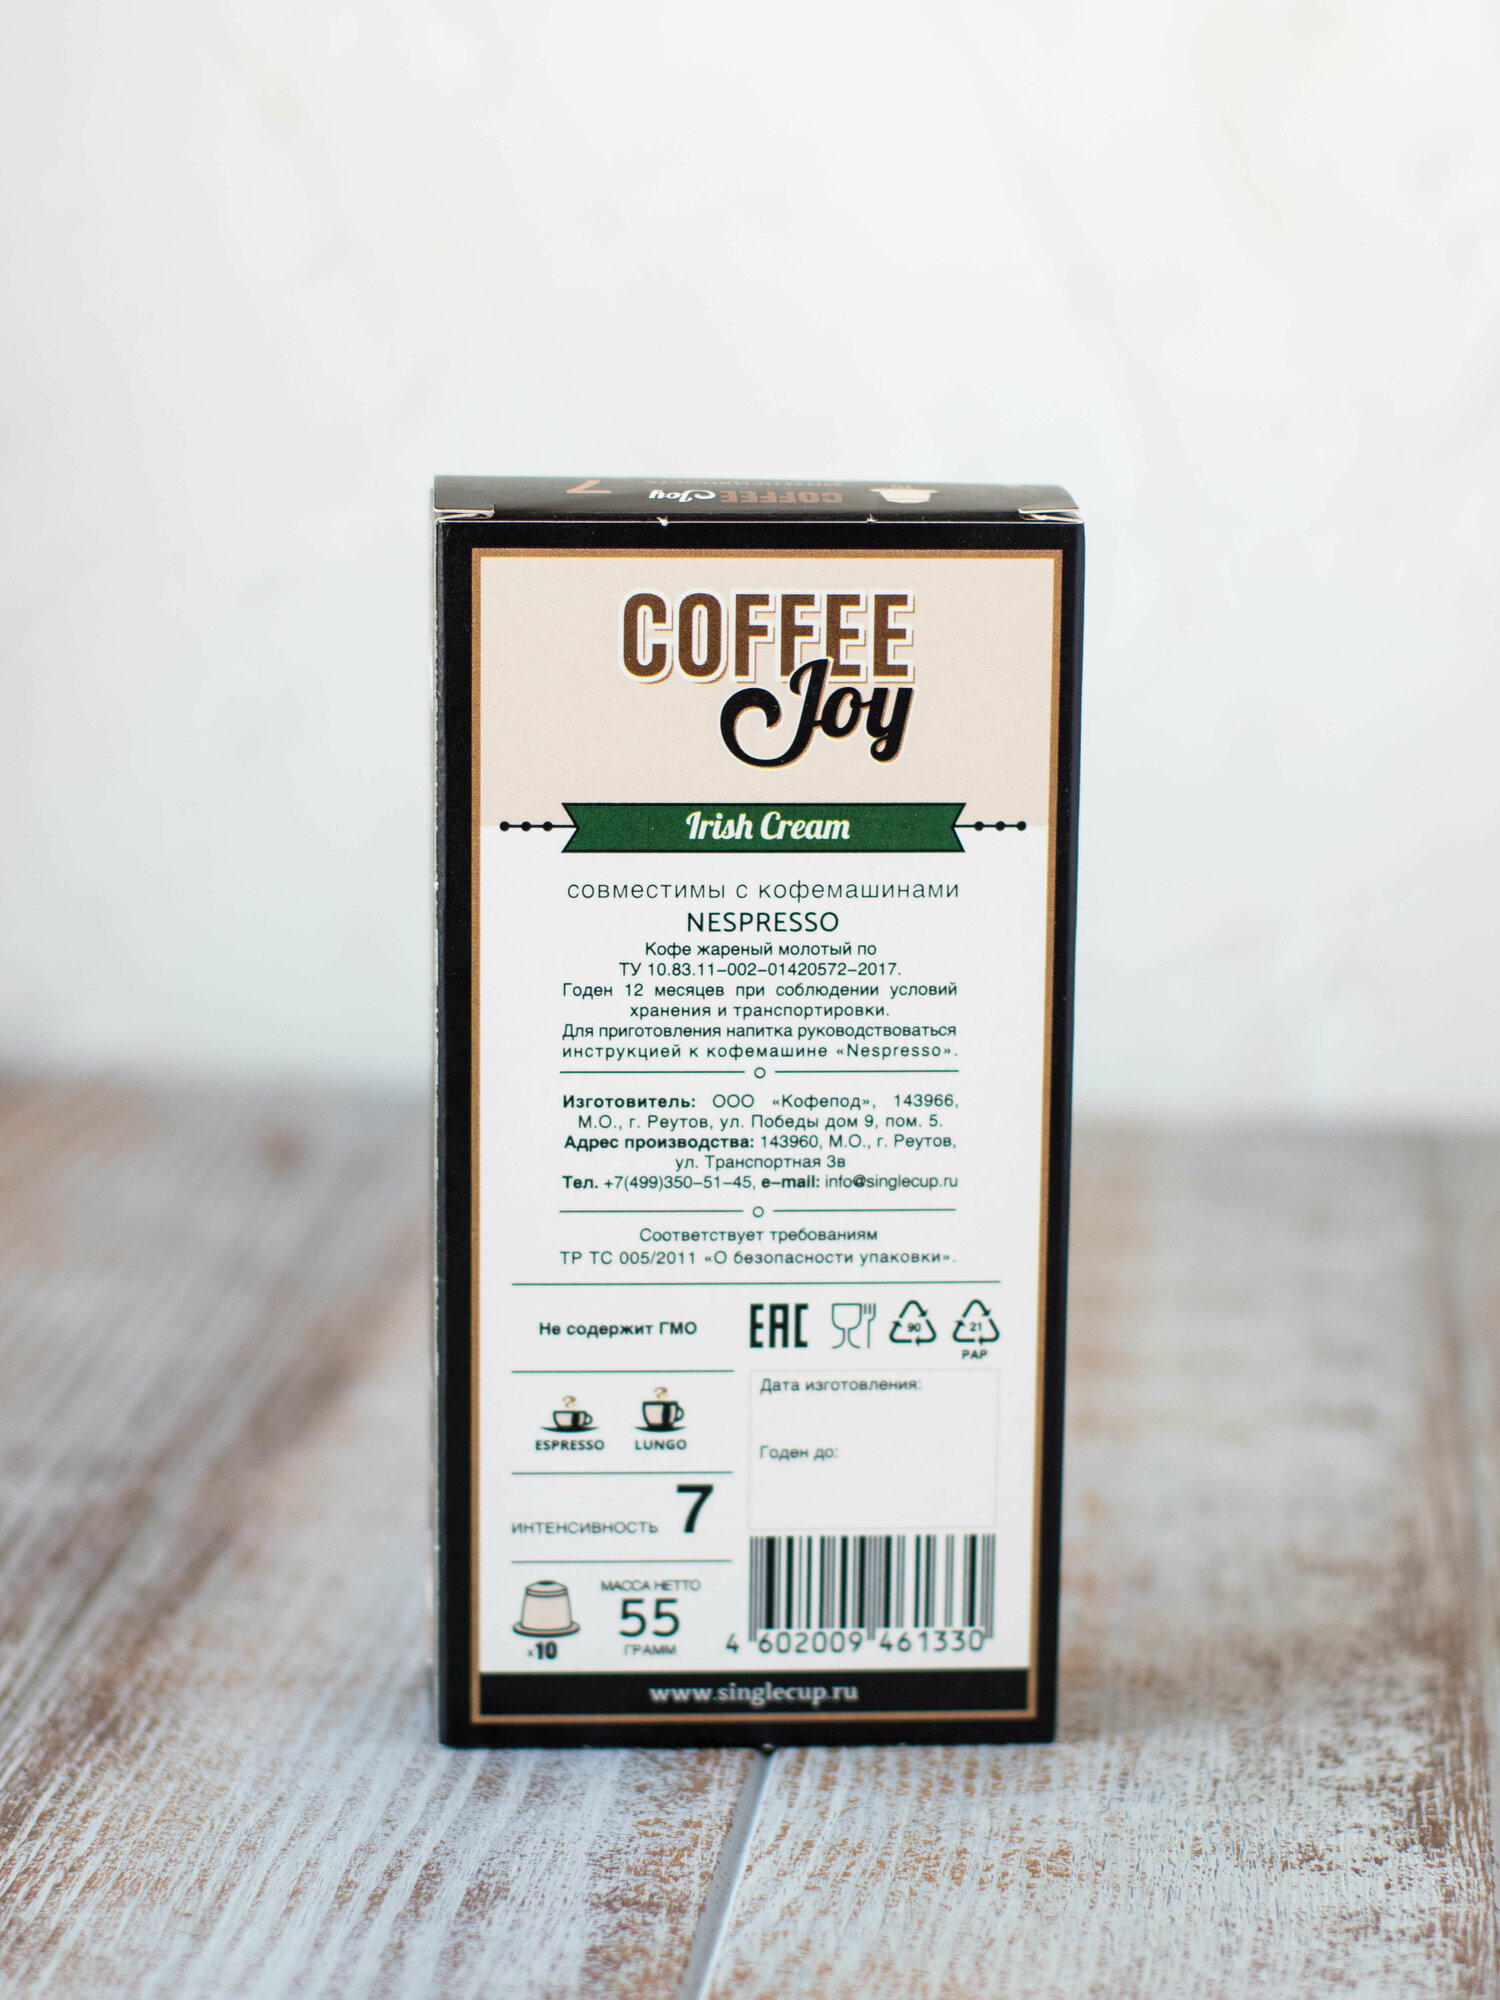 Кофе в капсулах Coffee Joy "Irish Cream", формата Nespresso (Неспрессо), 10 шт. - фотография № 3